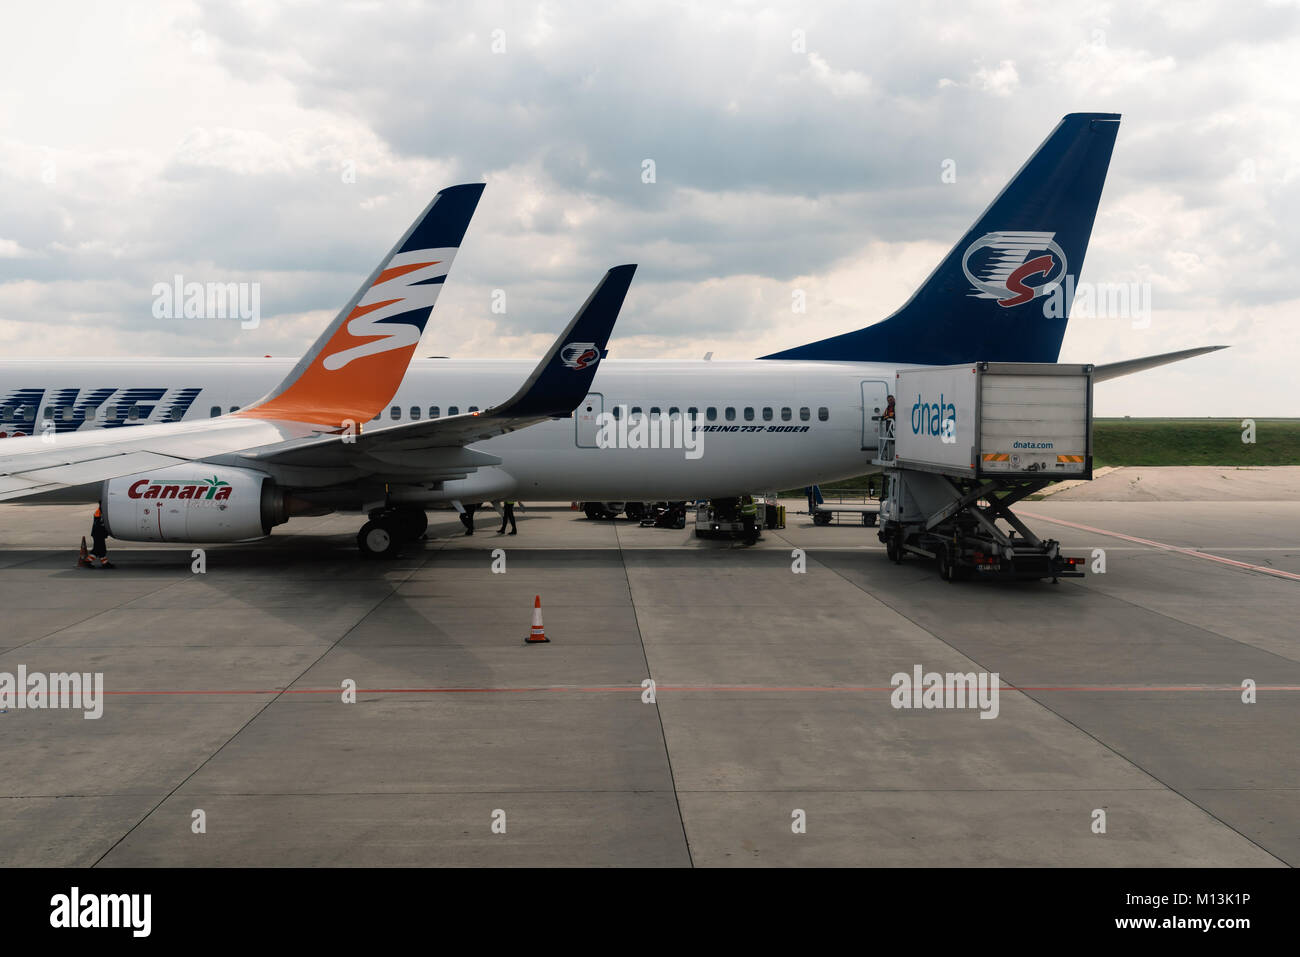 Prague, Czech Republic - August 22, 2017: Airplanes in runway of Vaclav Havel Prague Airport Stock Photo